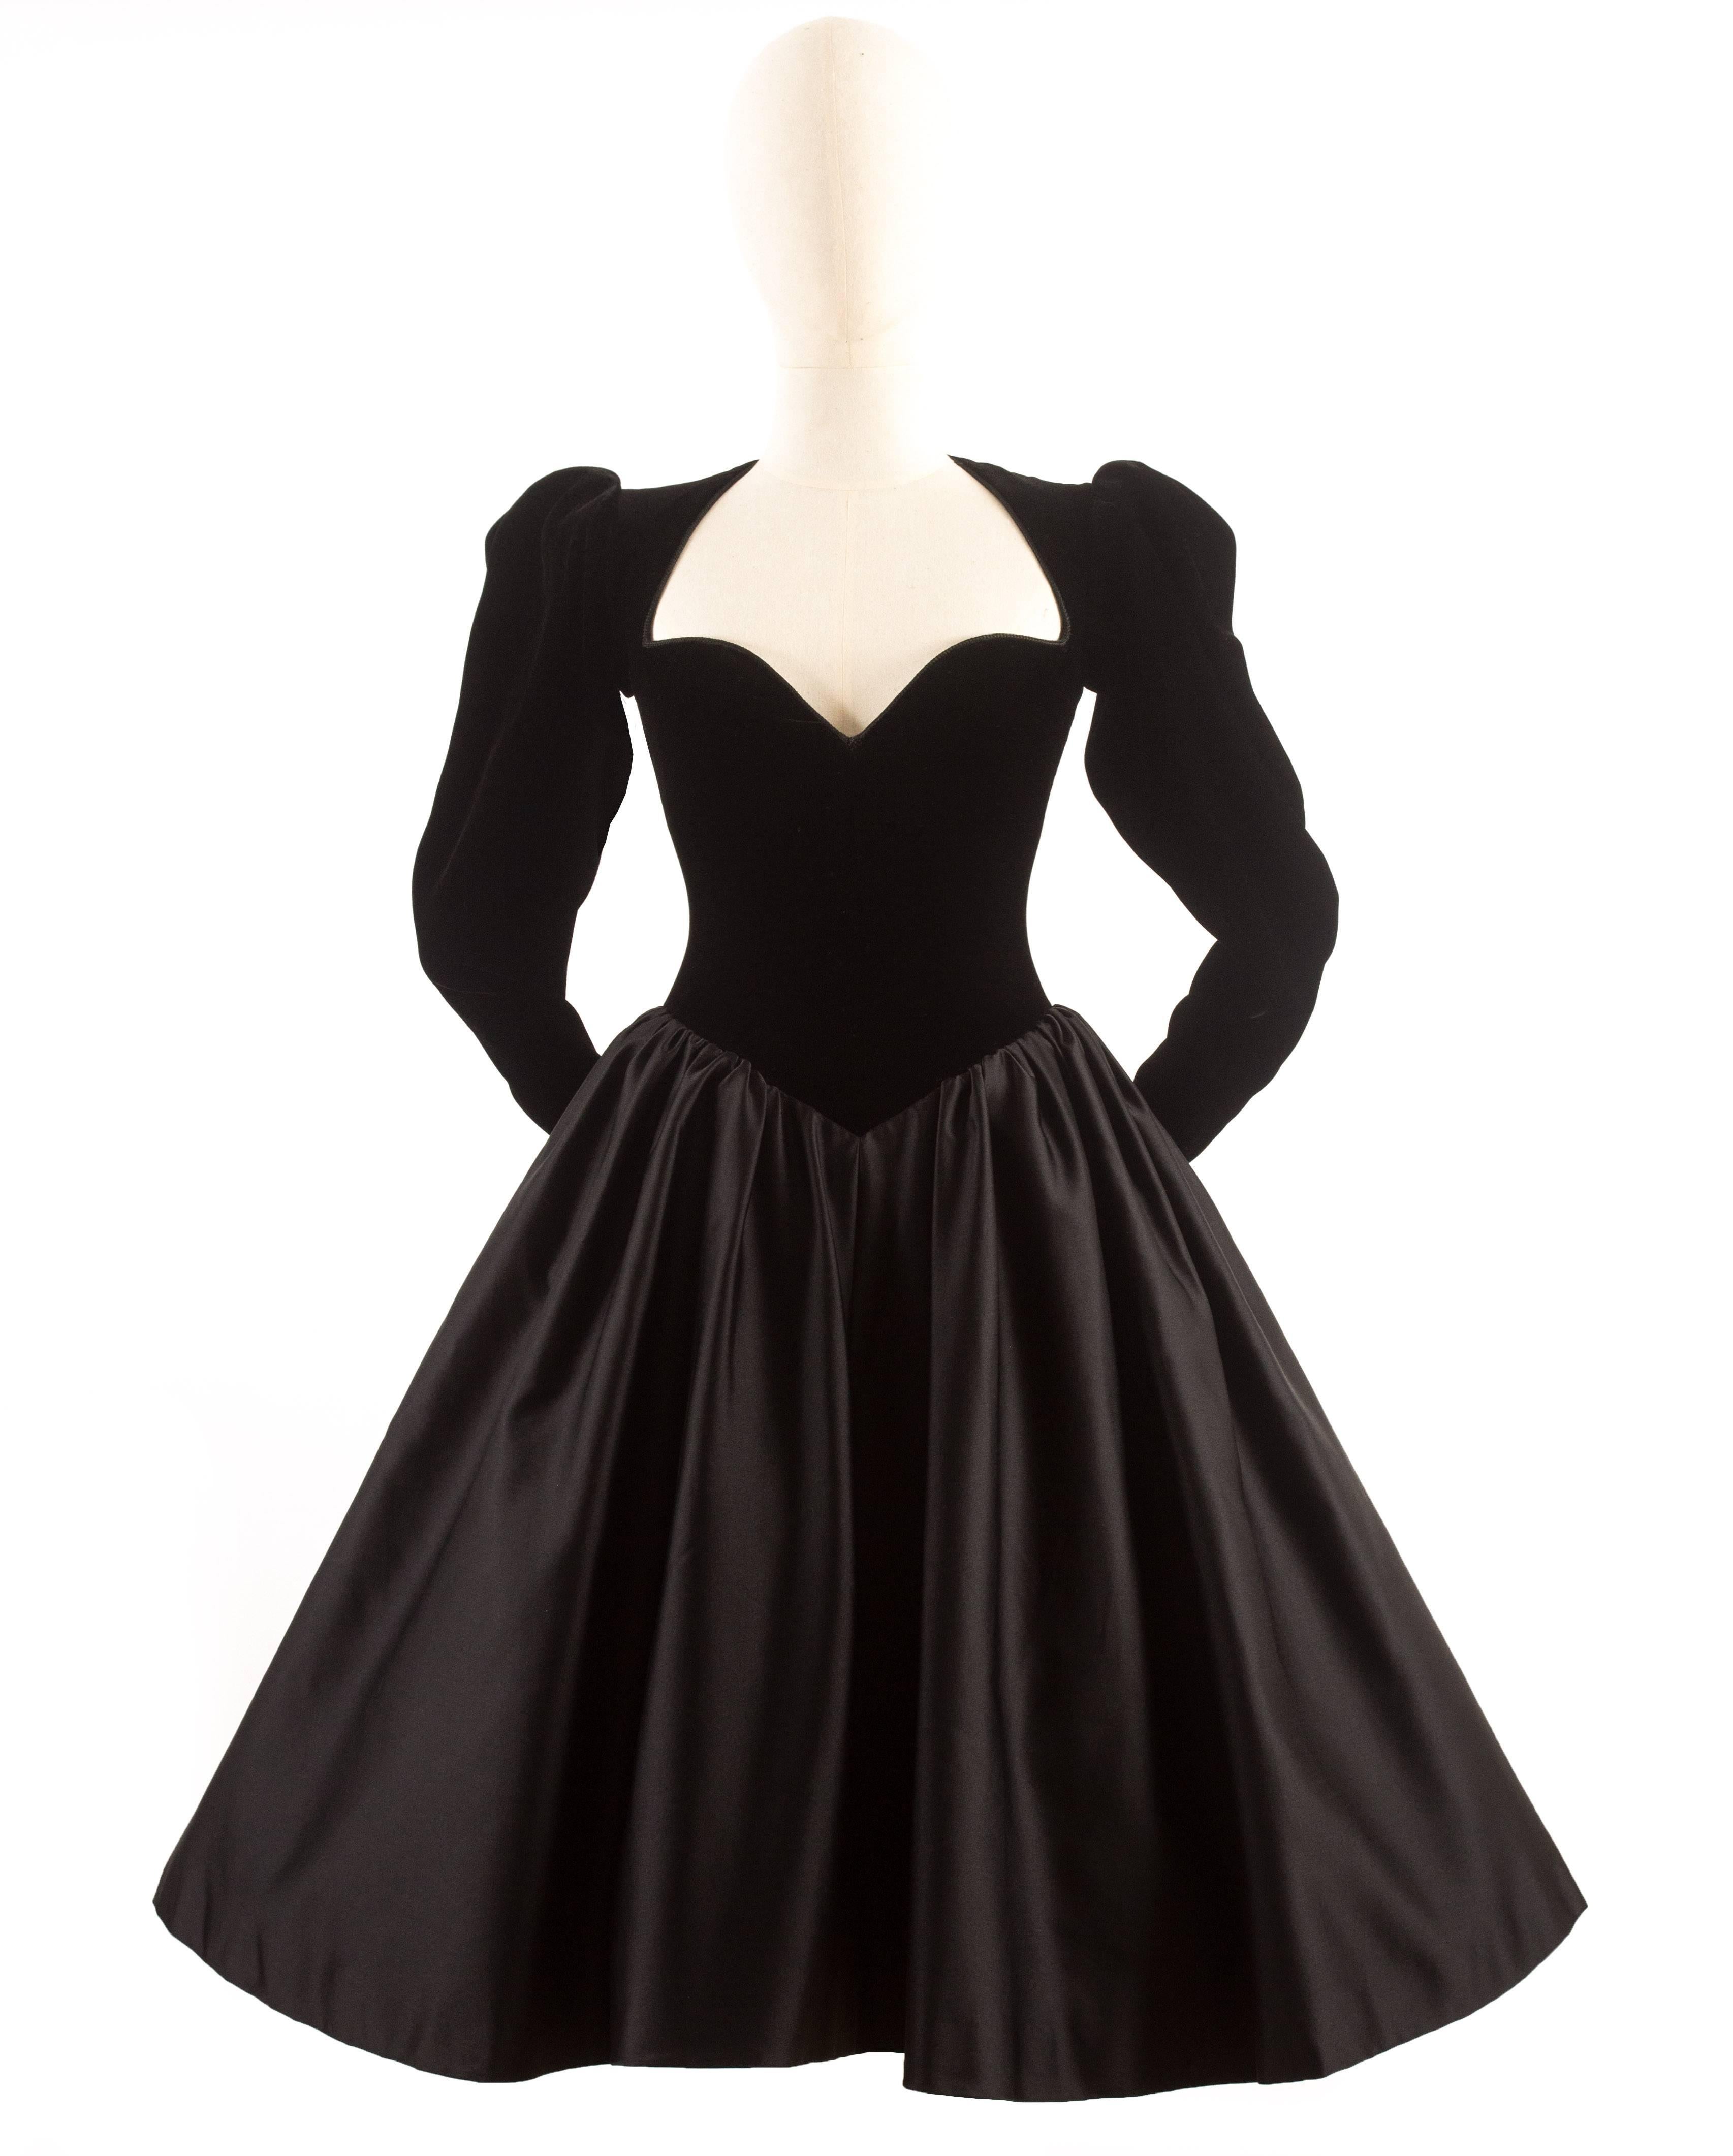 Yves Saint Laurent Haute Couture Autumn-Winter 1981 black velvet cocktail dress with ample pleated skirt of silk satin. 